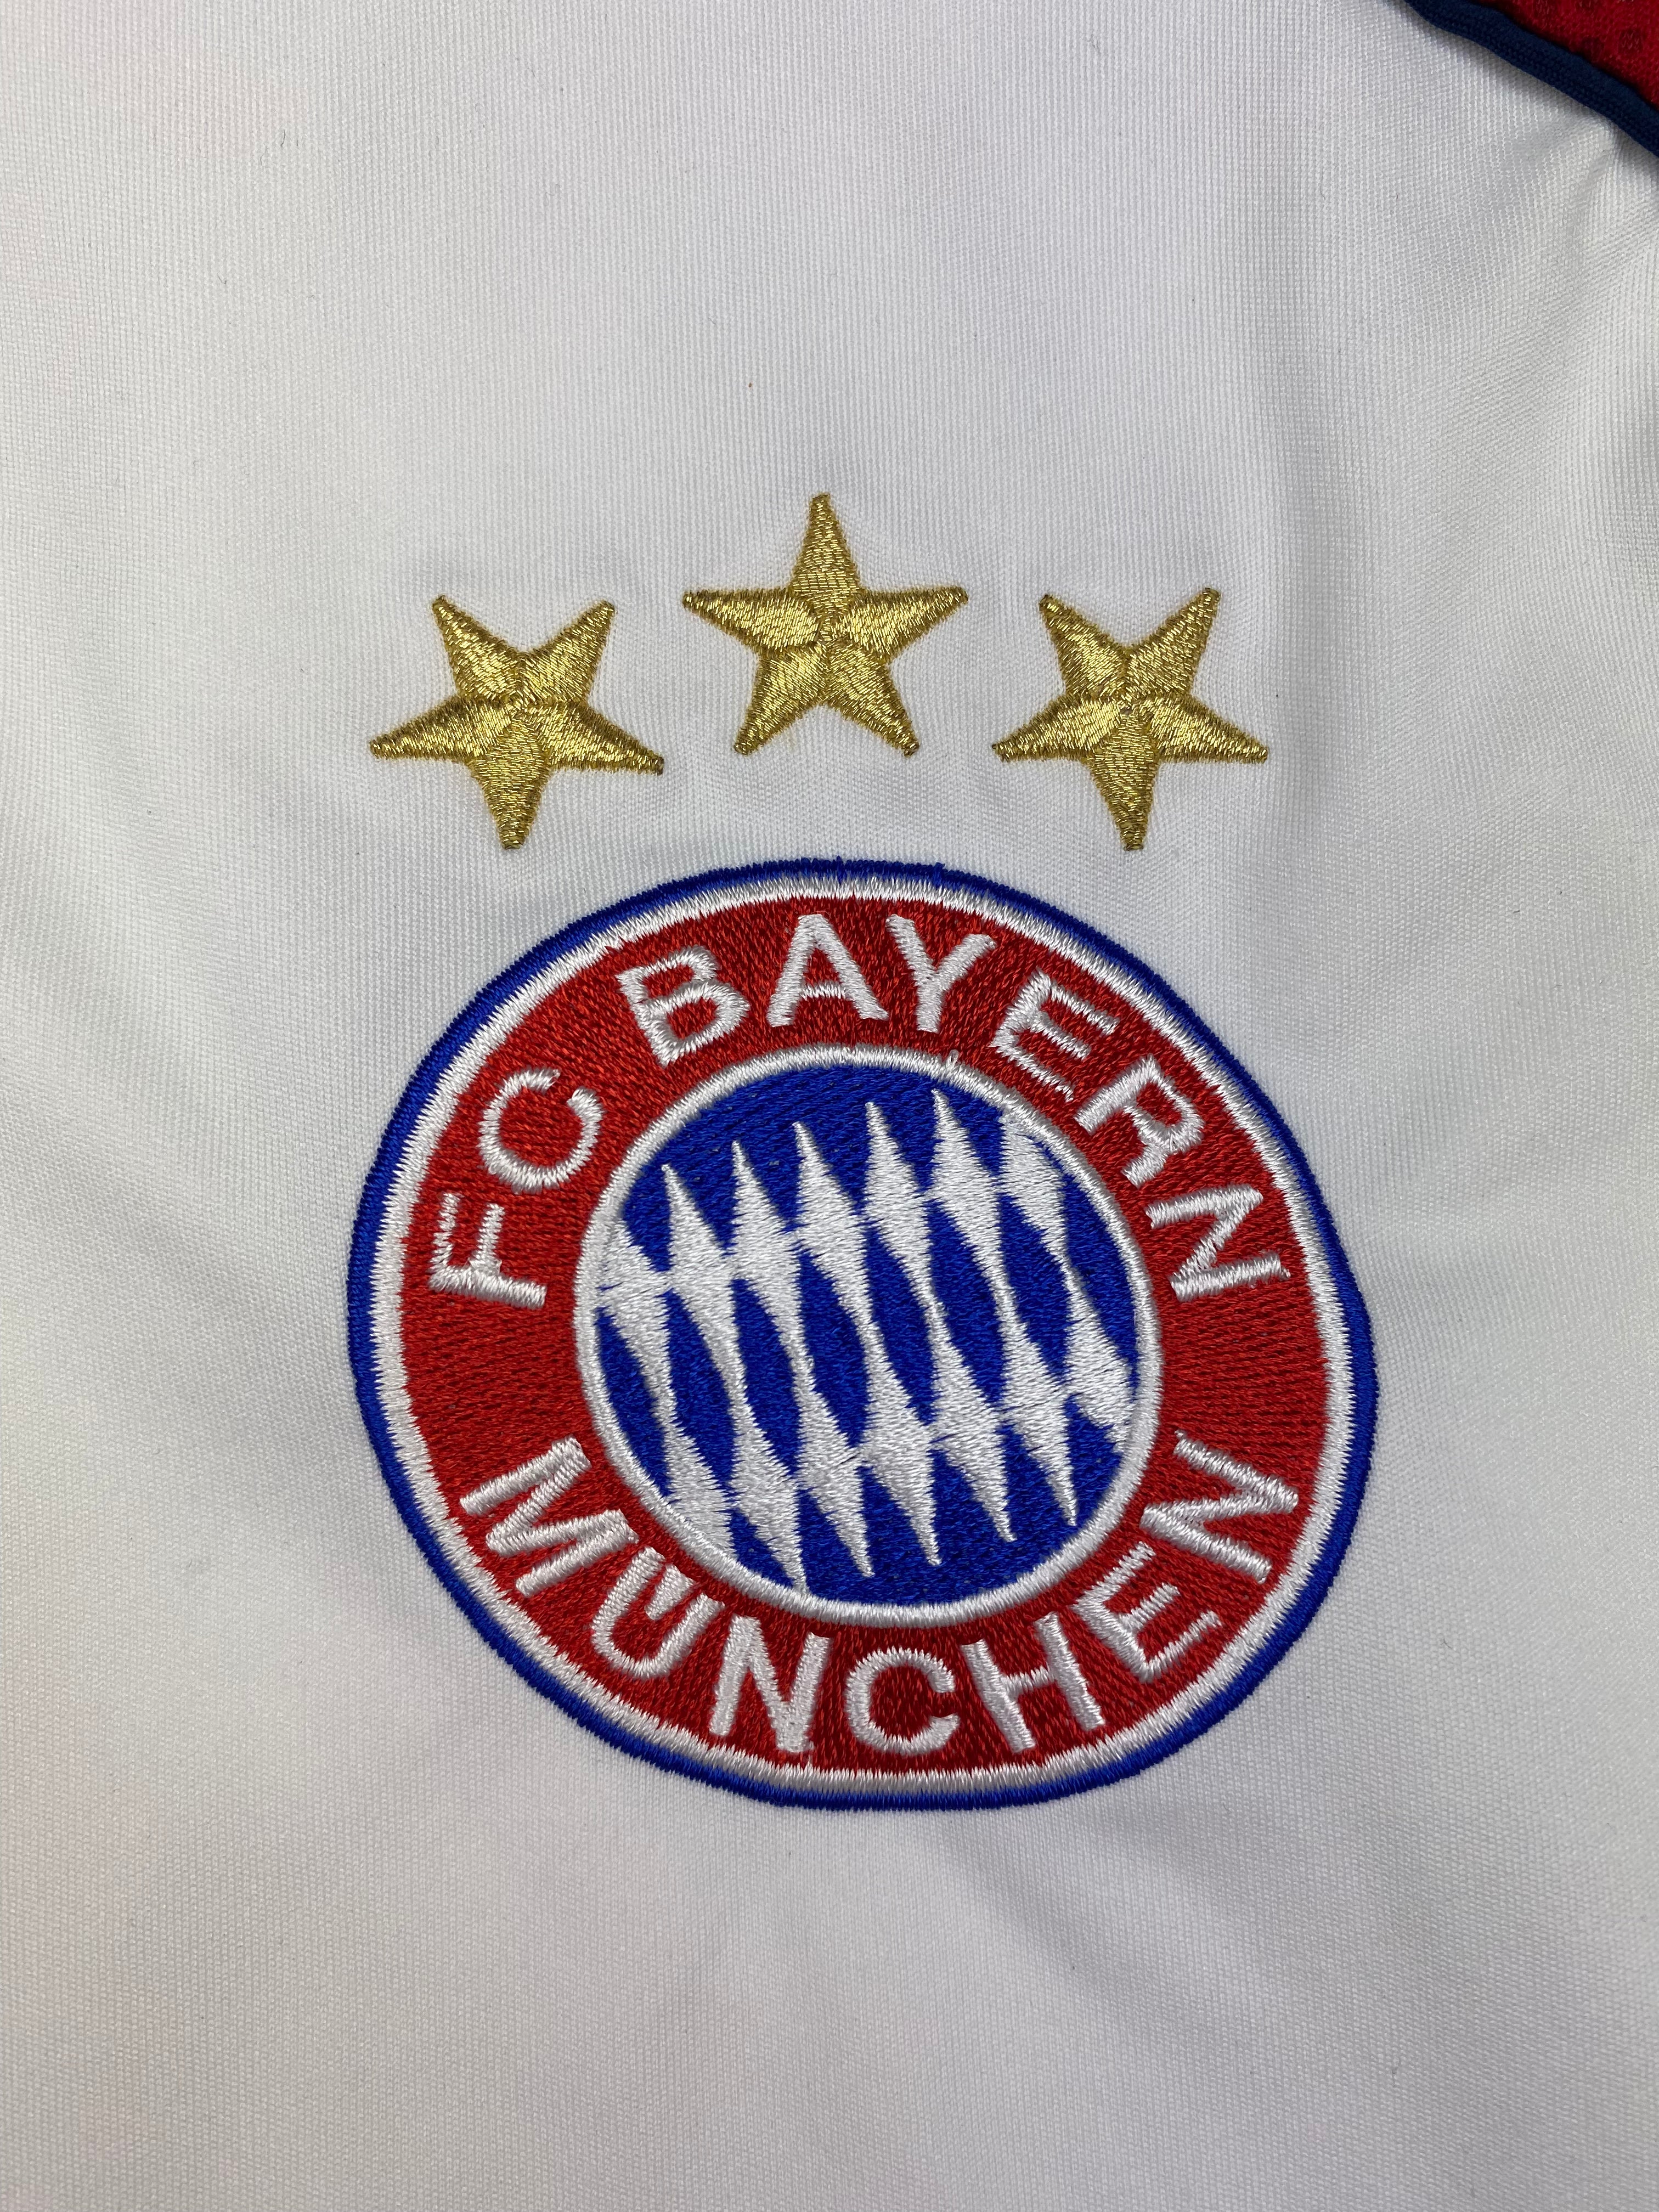 2006/07 Bayern Munich Away Shirt Podolski #11 (XL) 8/10